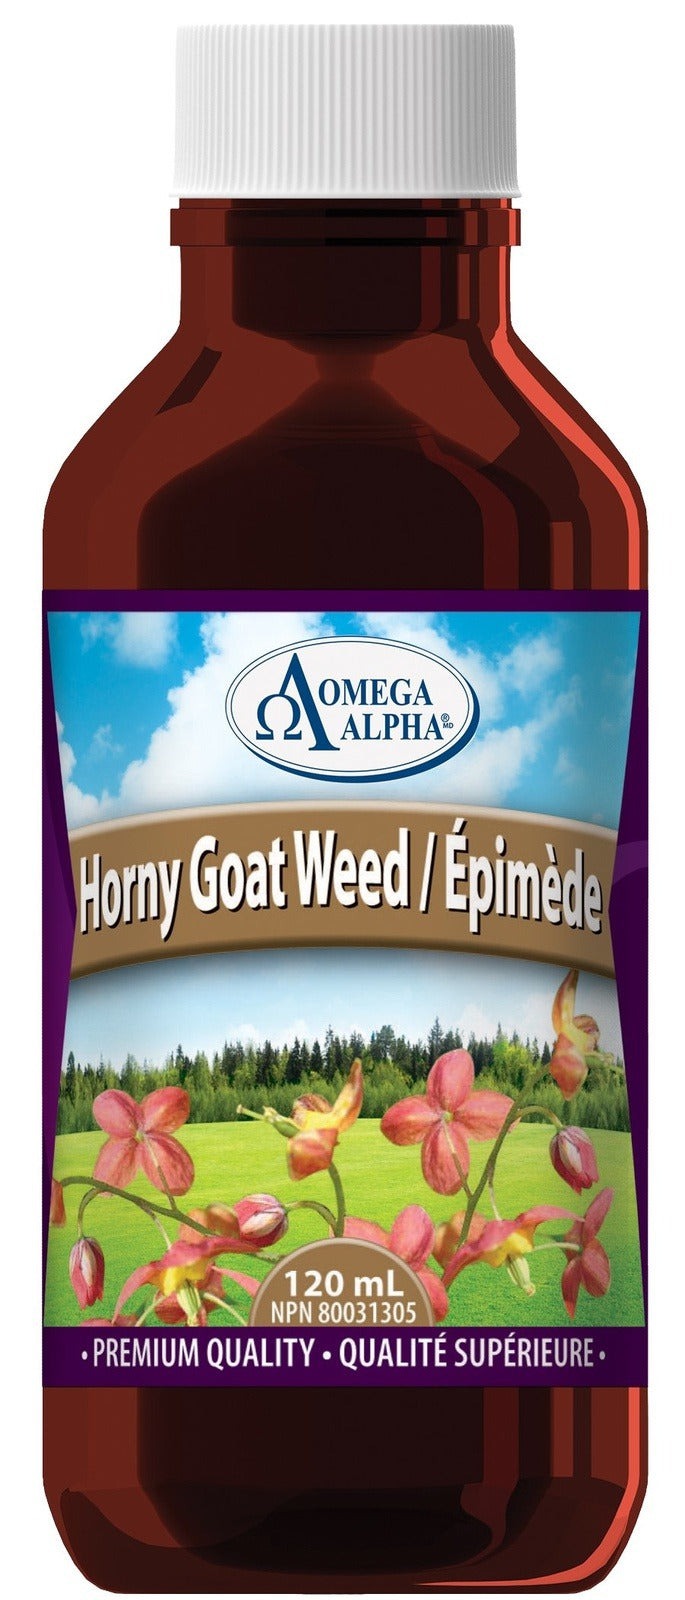 Omega Alpha Horny Goat Weed 120 mL Image 1